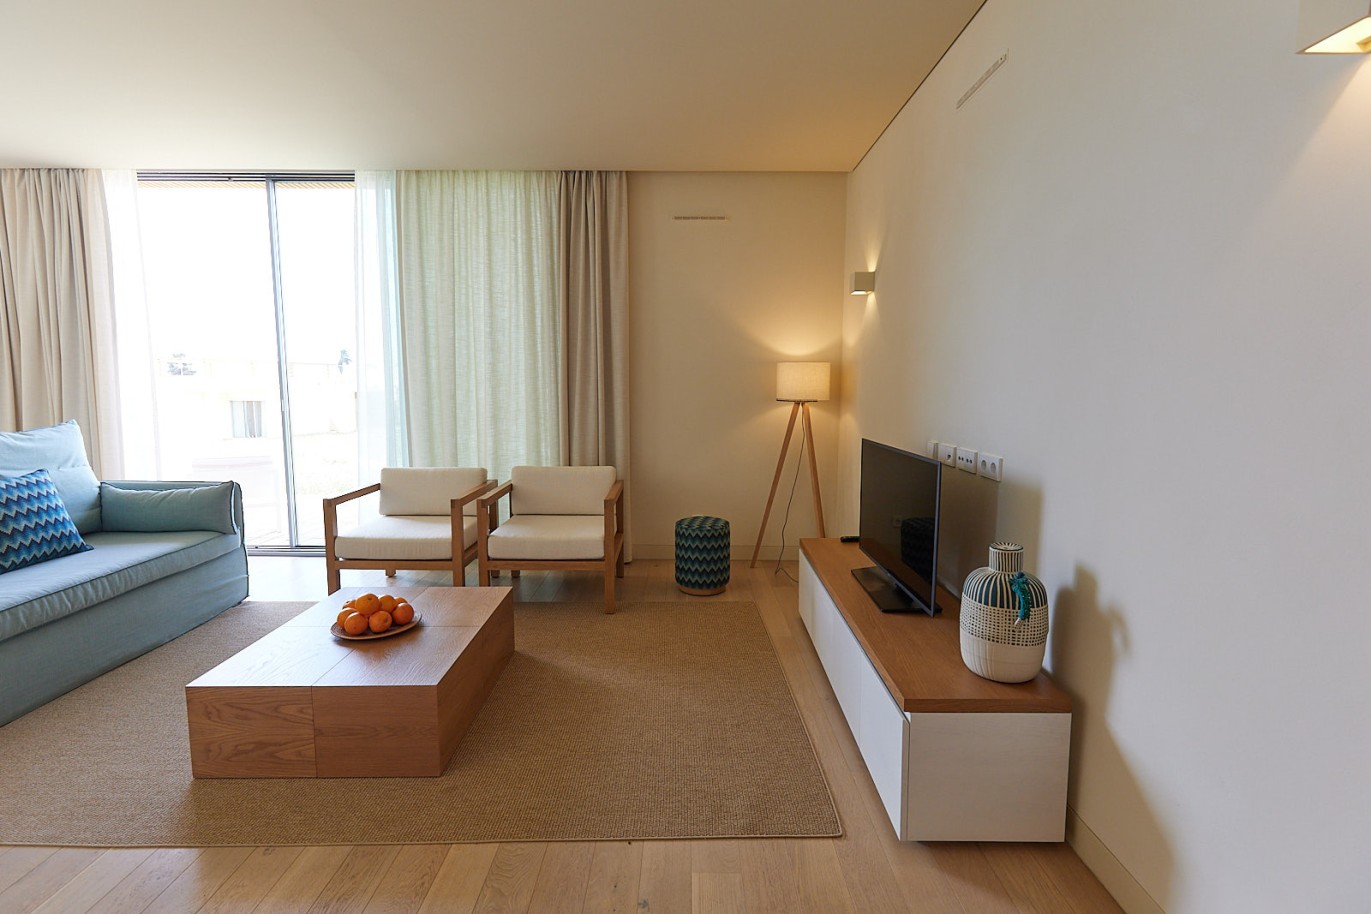 2 bedroom apartment in resort, for sale in Porches, Algarve_230572